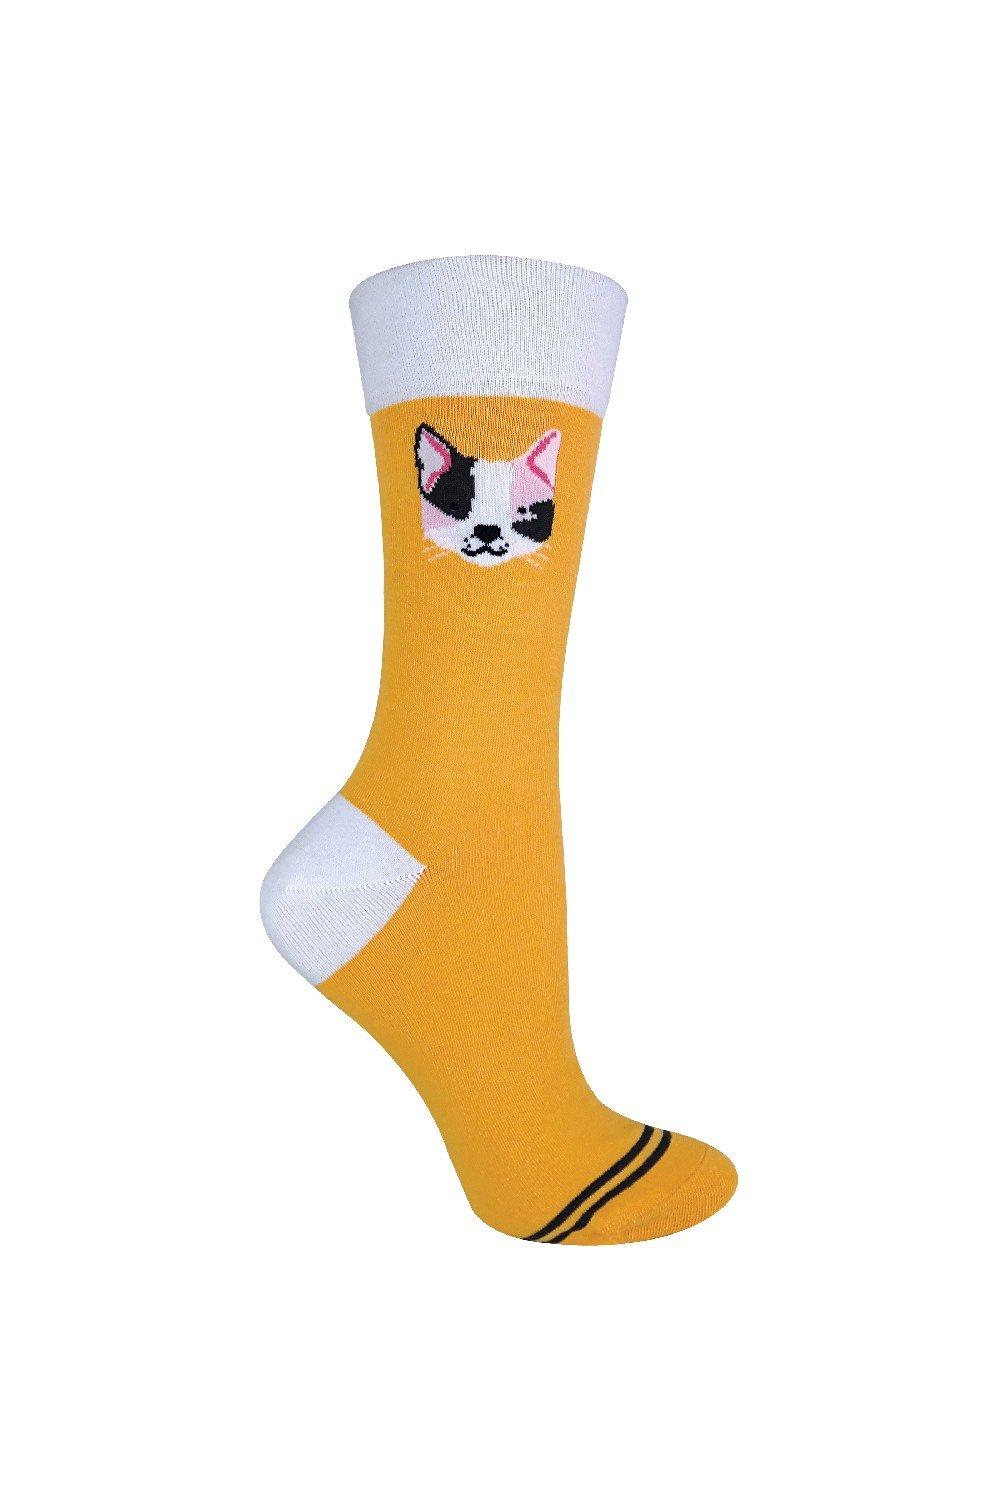 Soft Cotton Gift Novelty Dog Socks with Beagle/Pug/Scotty Dog